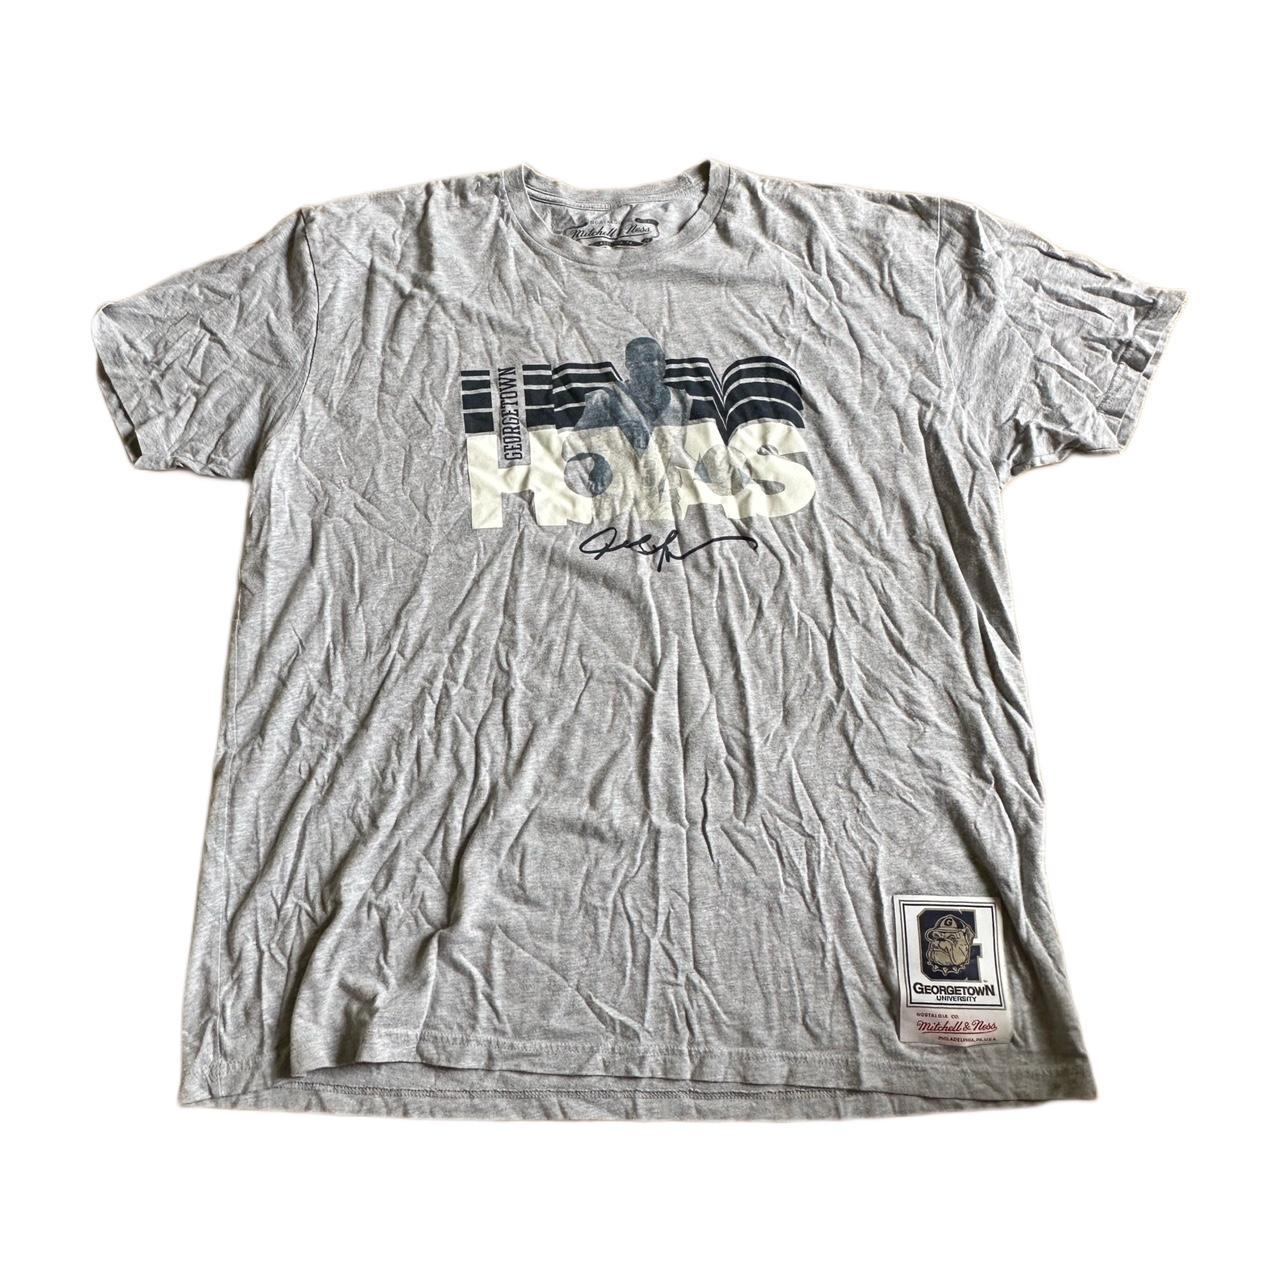 Mitchell & Ness Men's T-Shirt - Grey - L